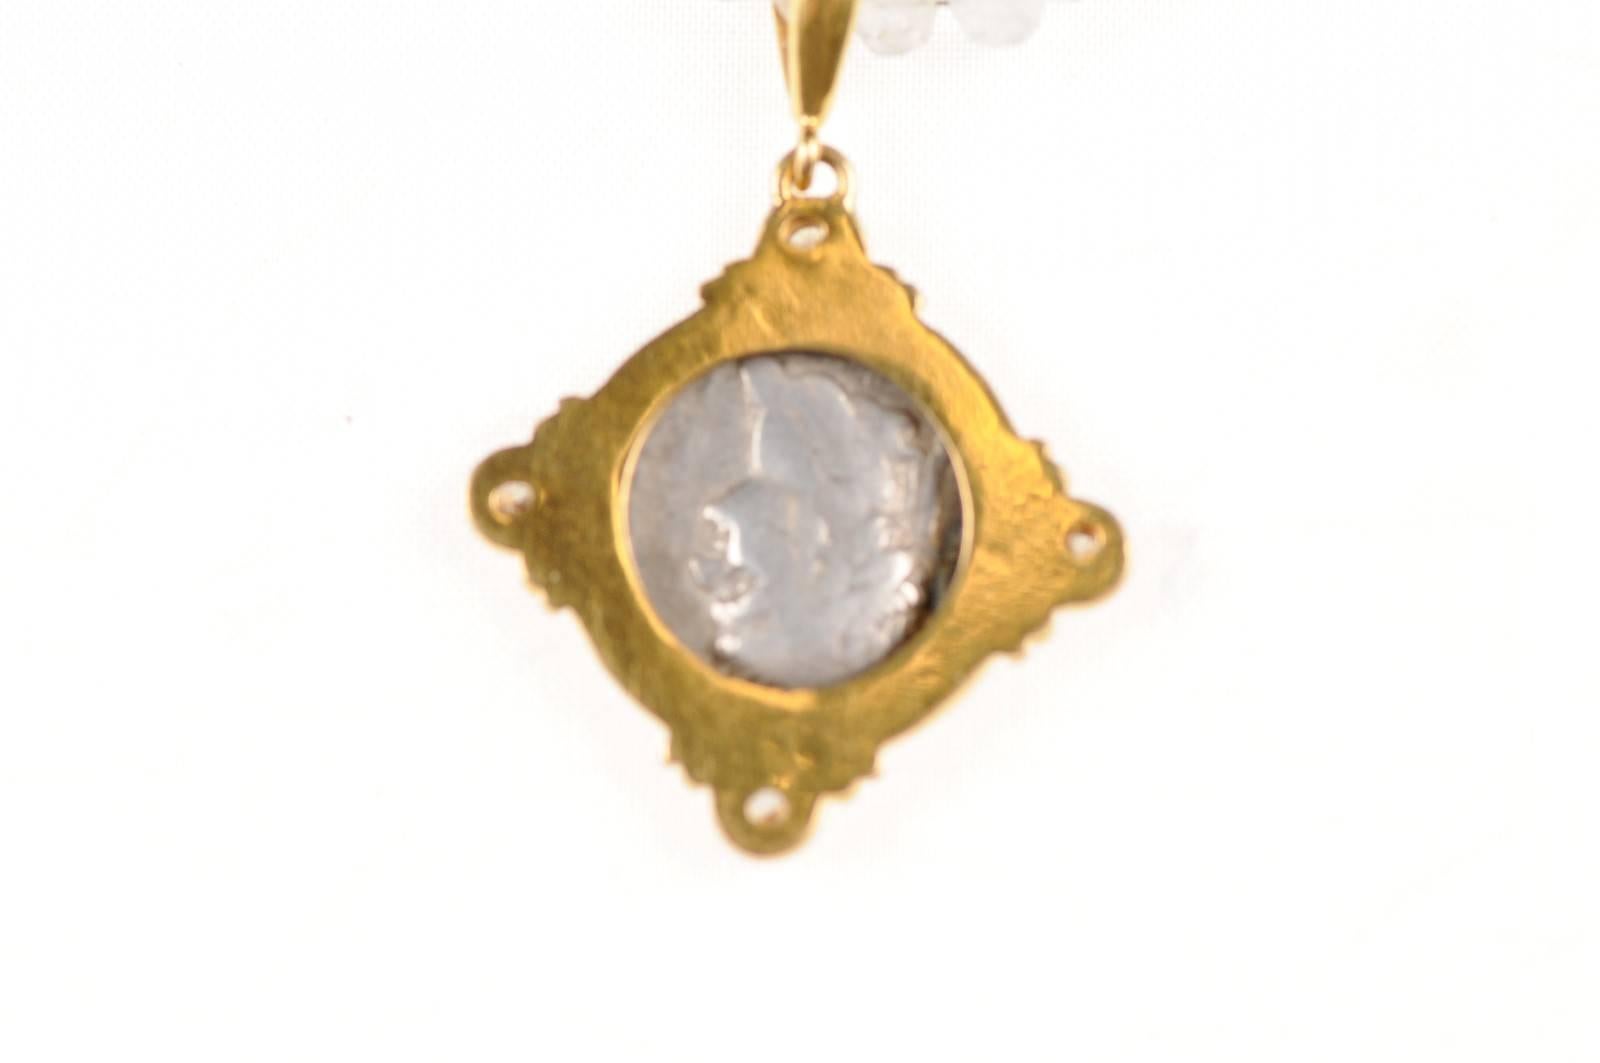 Roman Empire Domitian Coin circa 81-96 AD Set in Gold with Diamond Accents For Sale 3